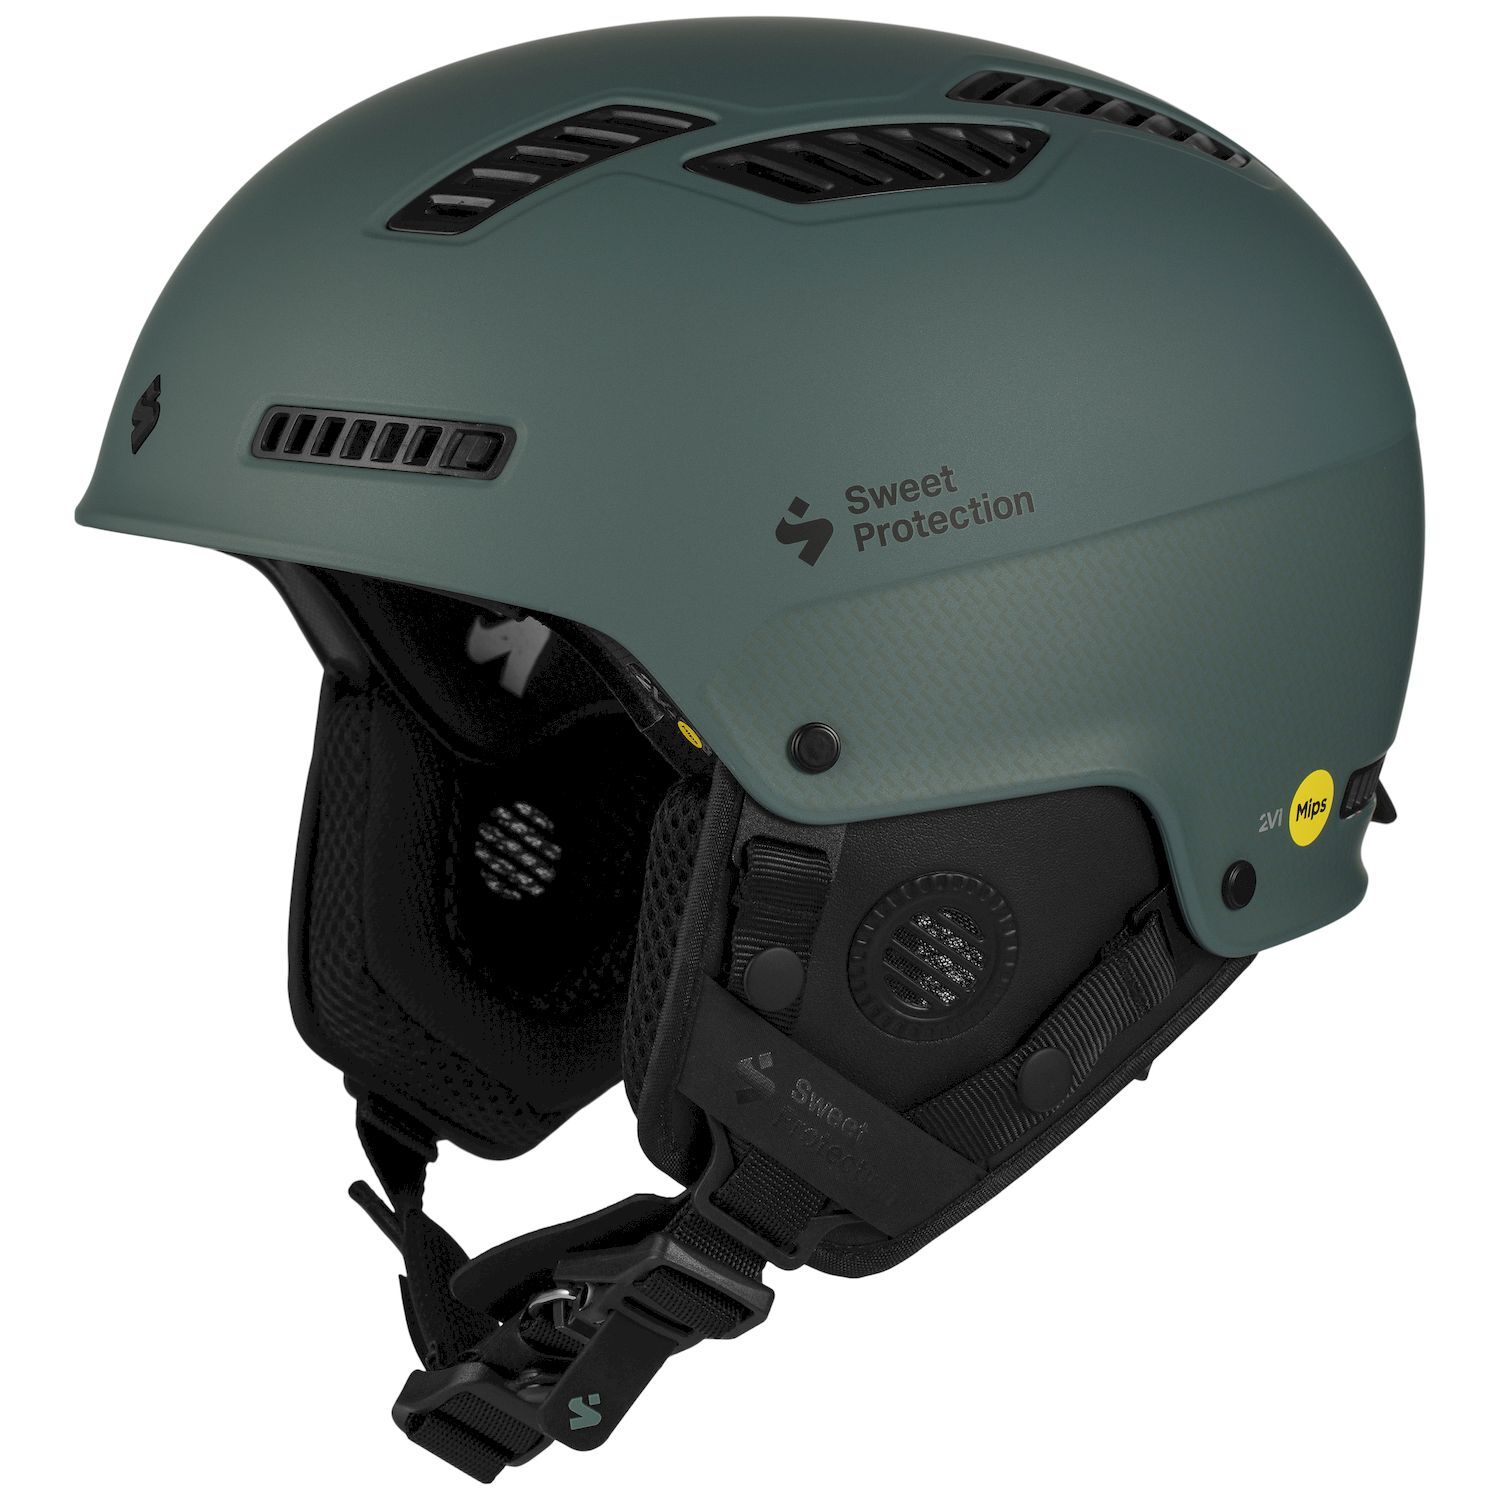 Sweet Protection Igniter 2Vi MIPS Helmet - Ski helmet - Men's